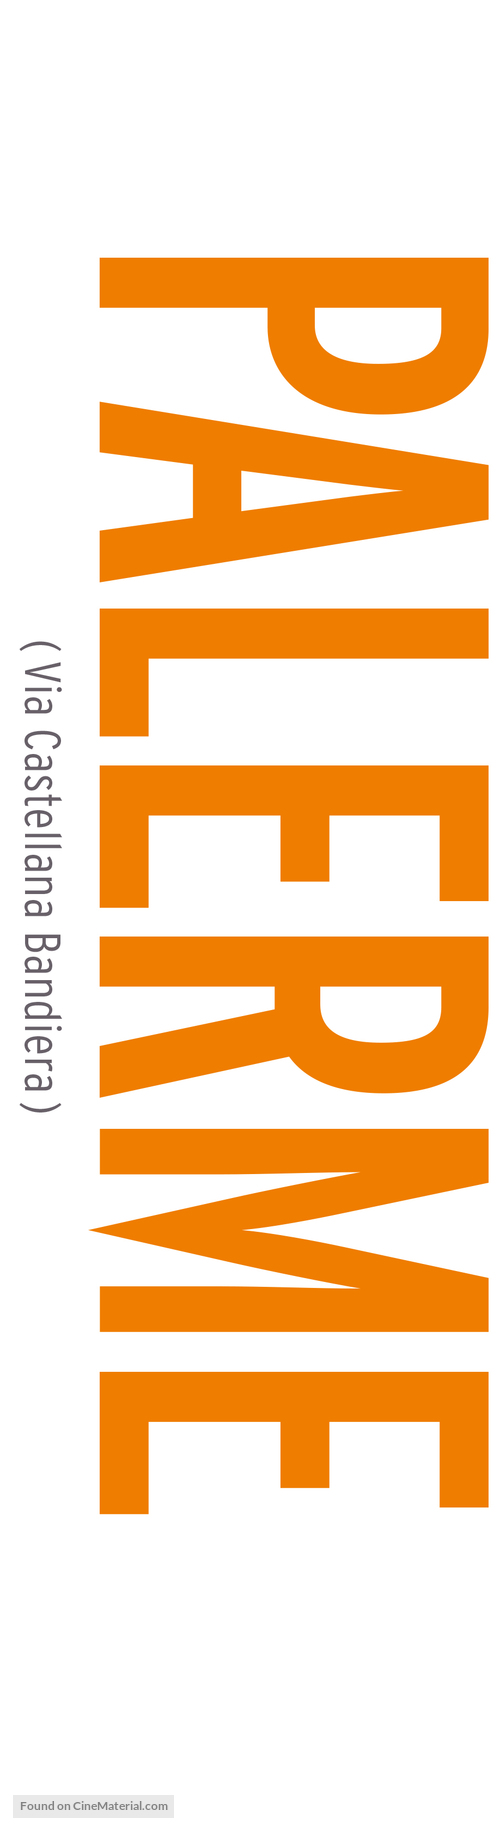 Via Castellana Bandiera - French Logo